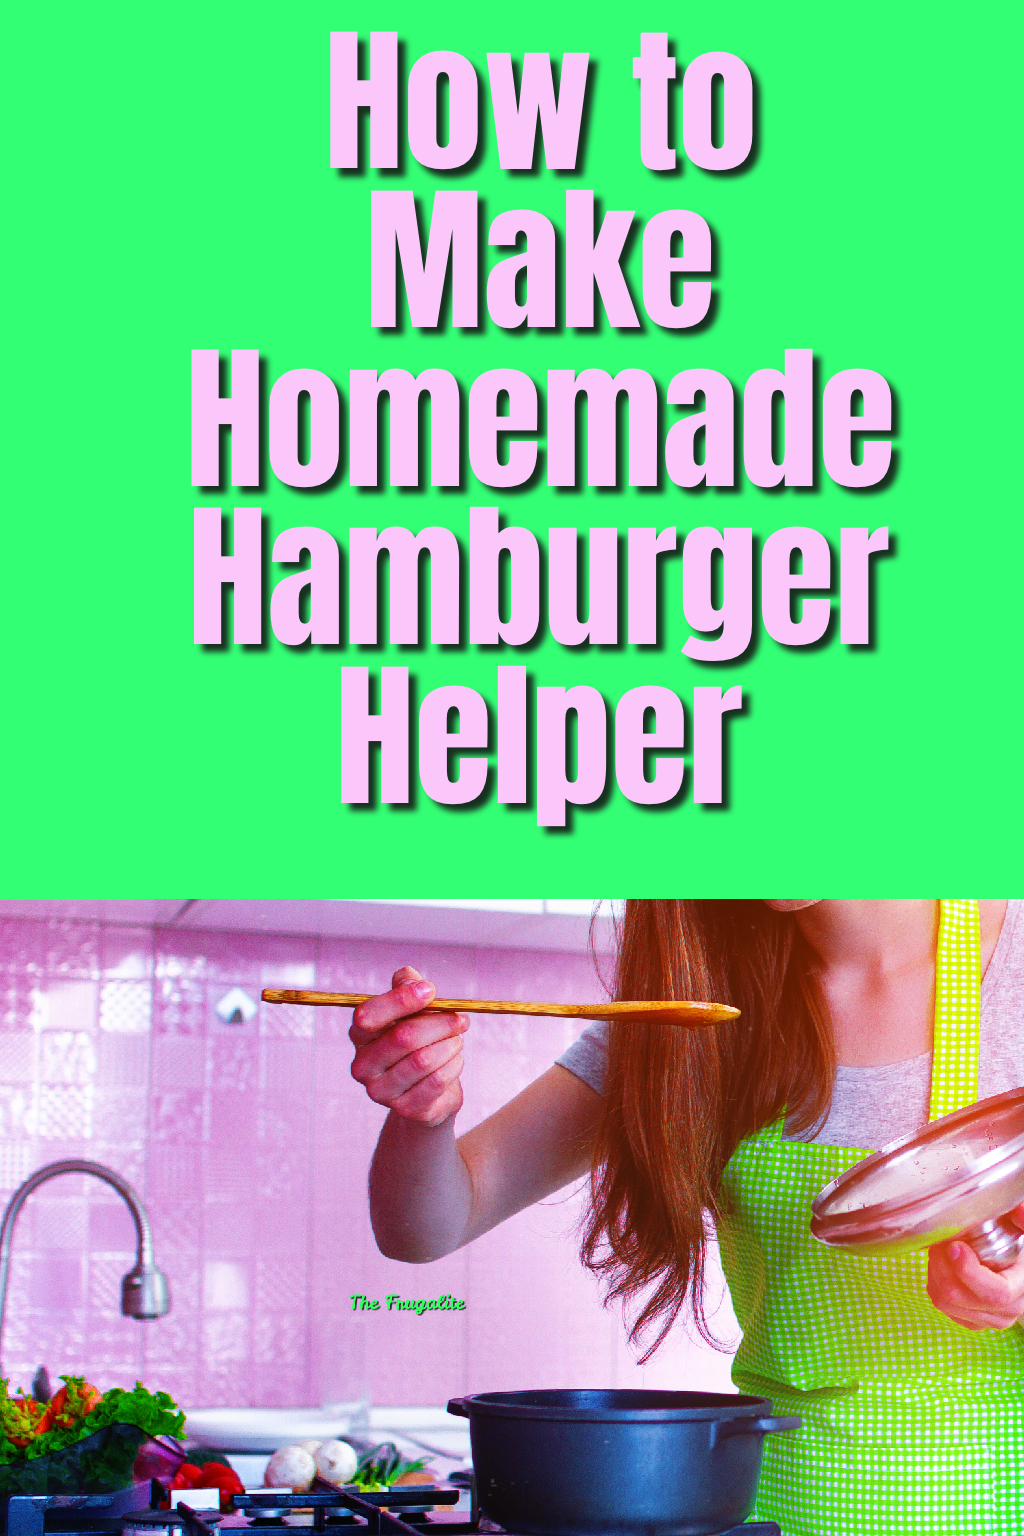 How to Make Homemade “Hamburger Helper“